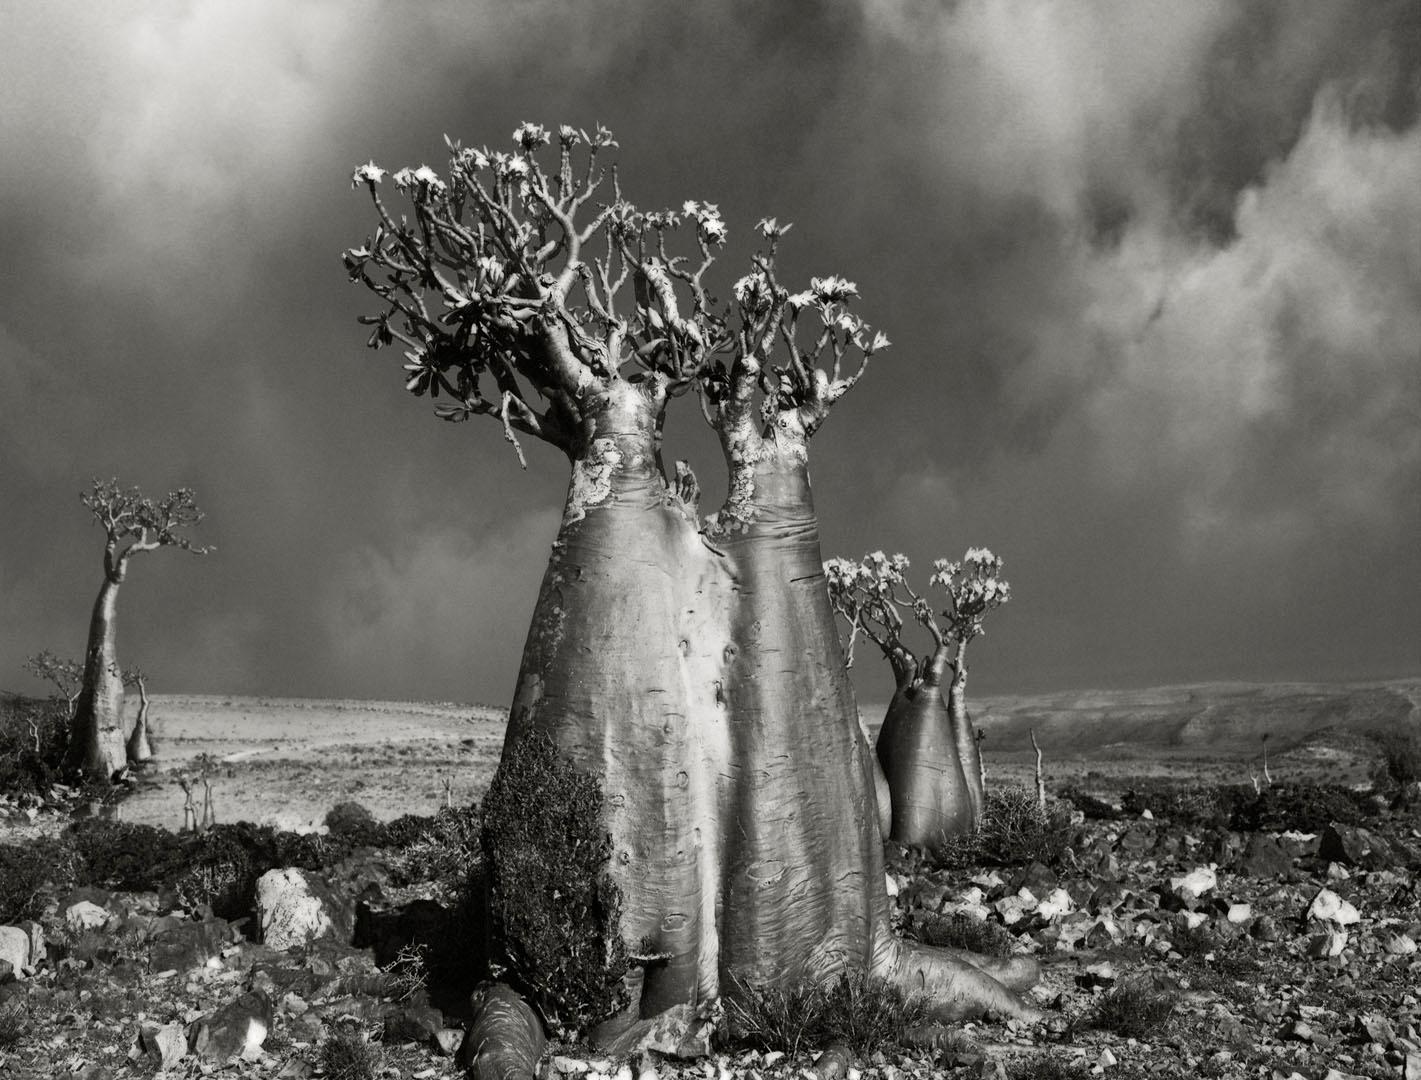 Landscape Photograph Beth Moon - Rose du désert (Wadi fa Lang)